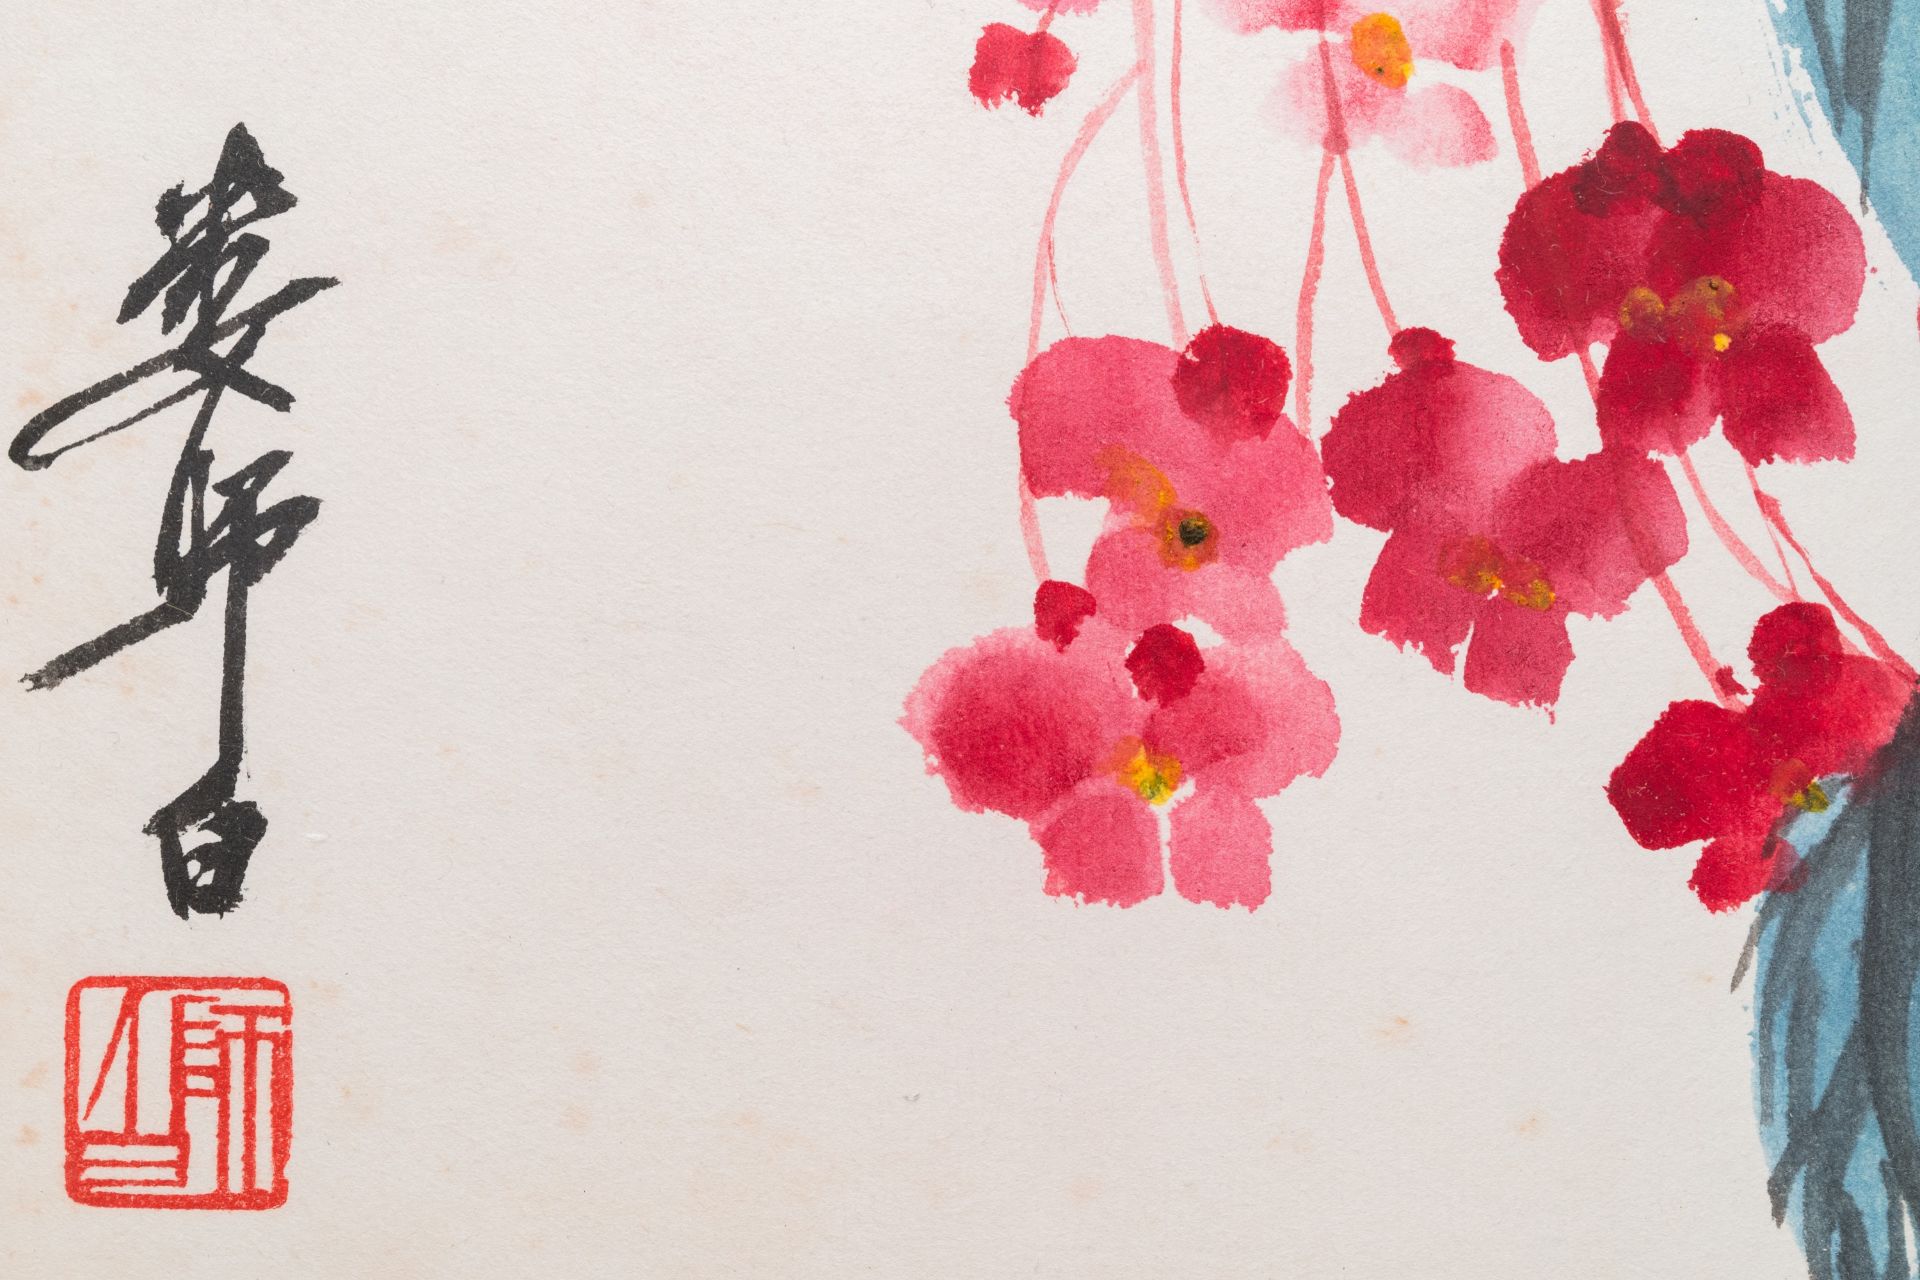 Lou Shibai å©å¸«ç™½ (1918-2010): 'Dragonfly and flowers' and Qi Gong å•ŸåŠŸ (1912-2005): 'Calligrap - Image 6 of 10